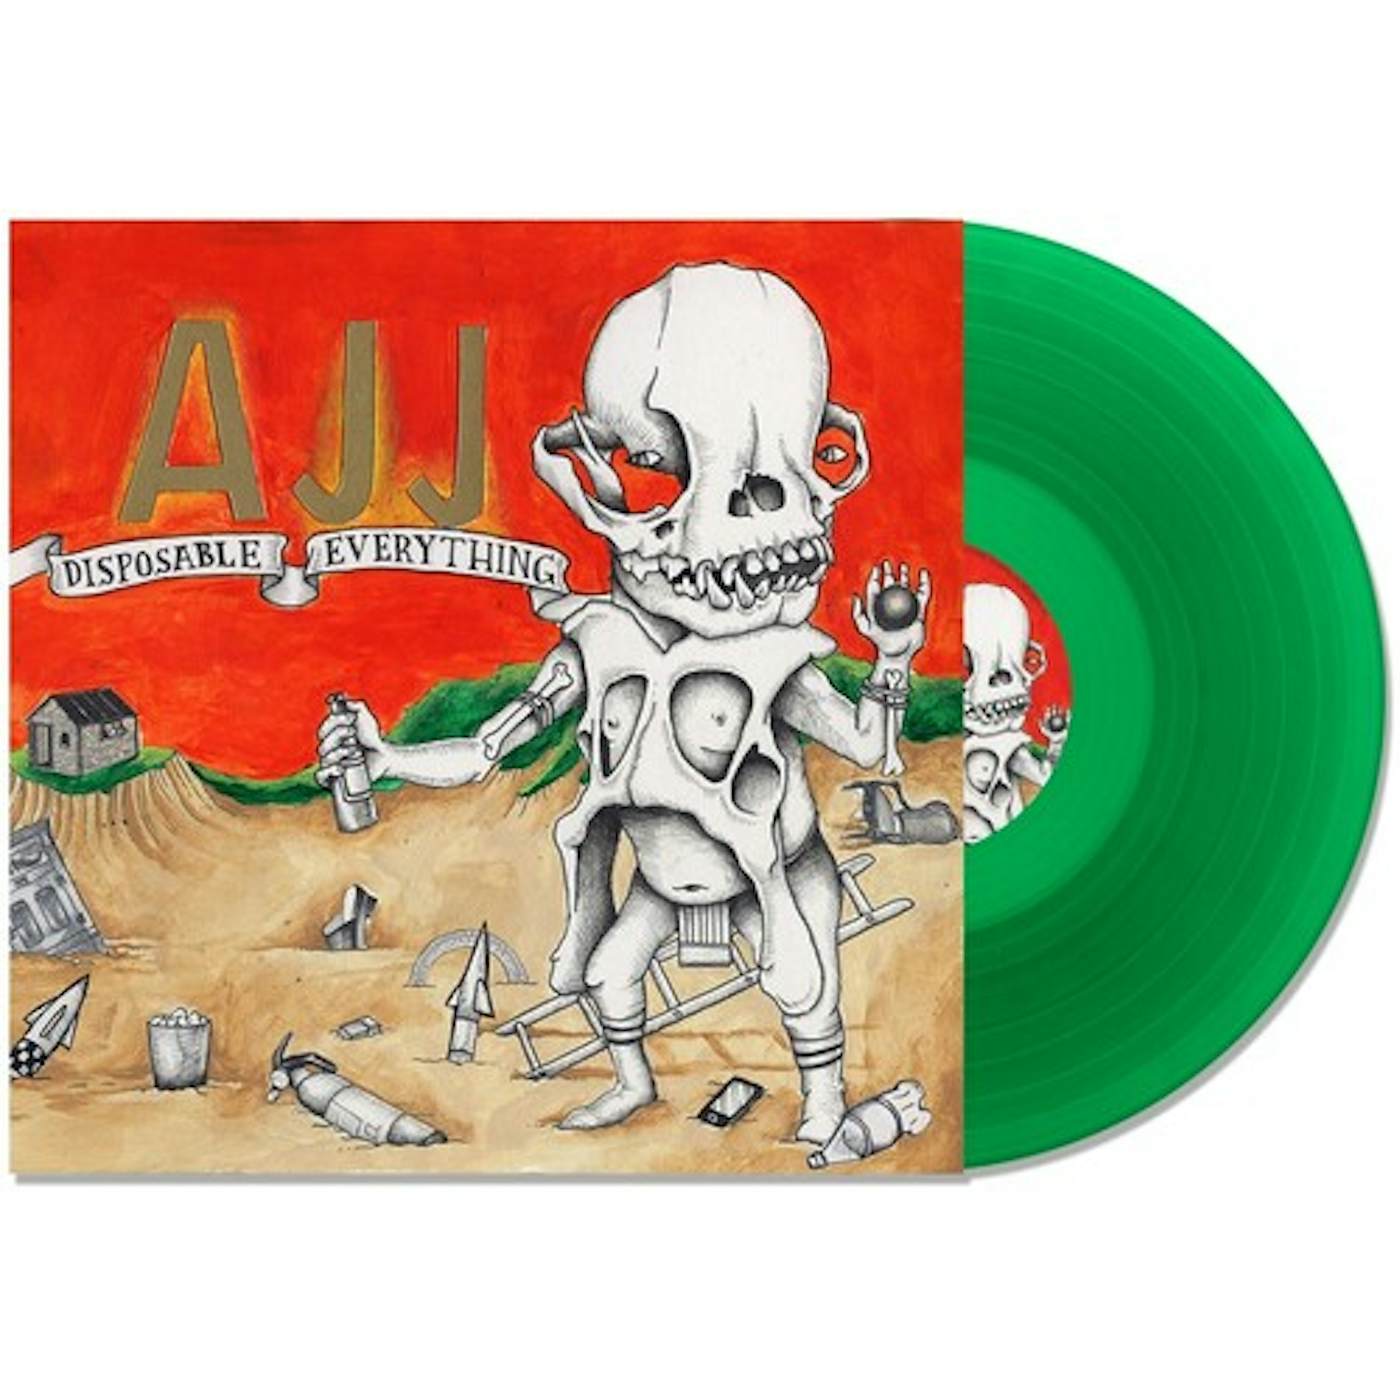 AJJ Disposable Everything - Green Vinyl Record